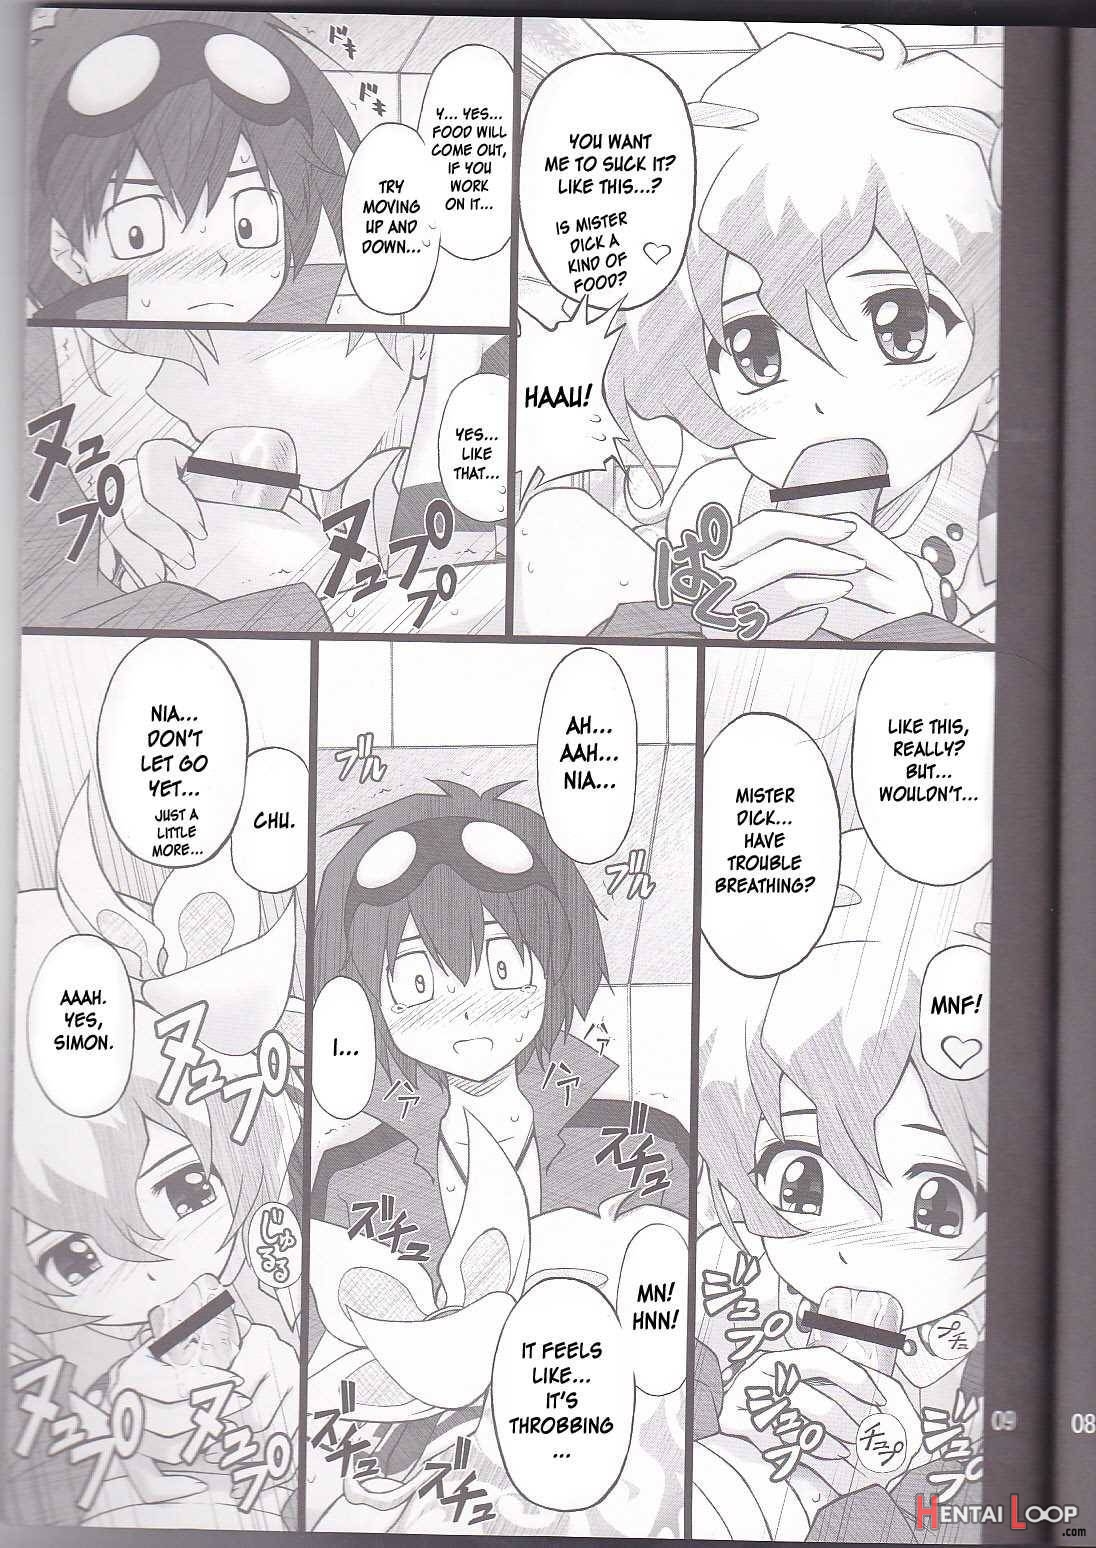 Oikari Nia-chan page 8